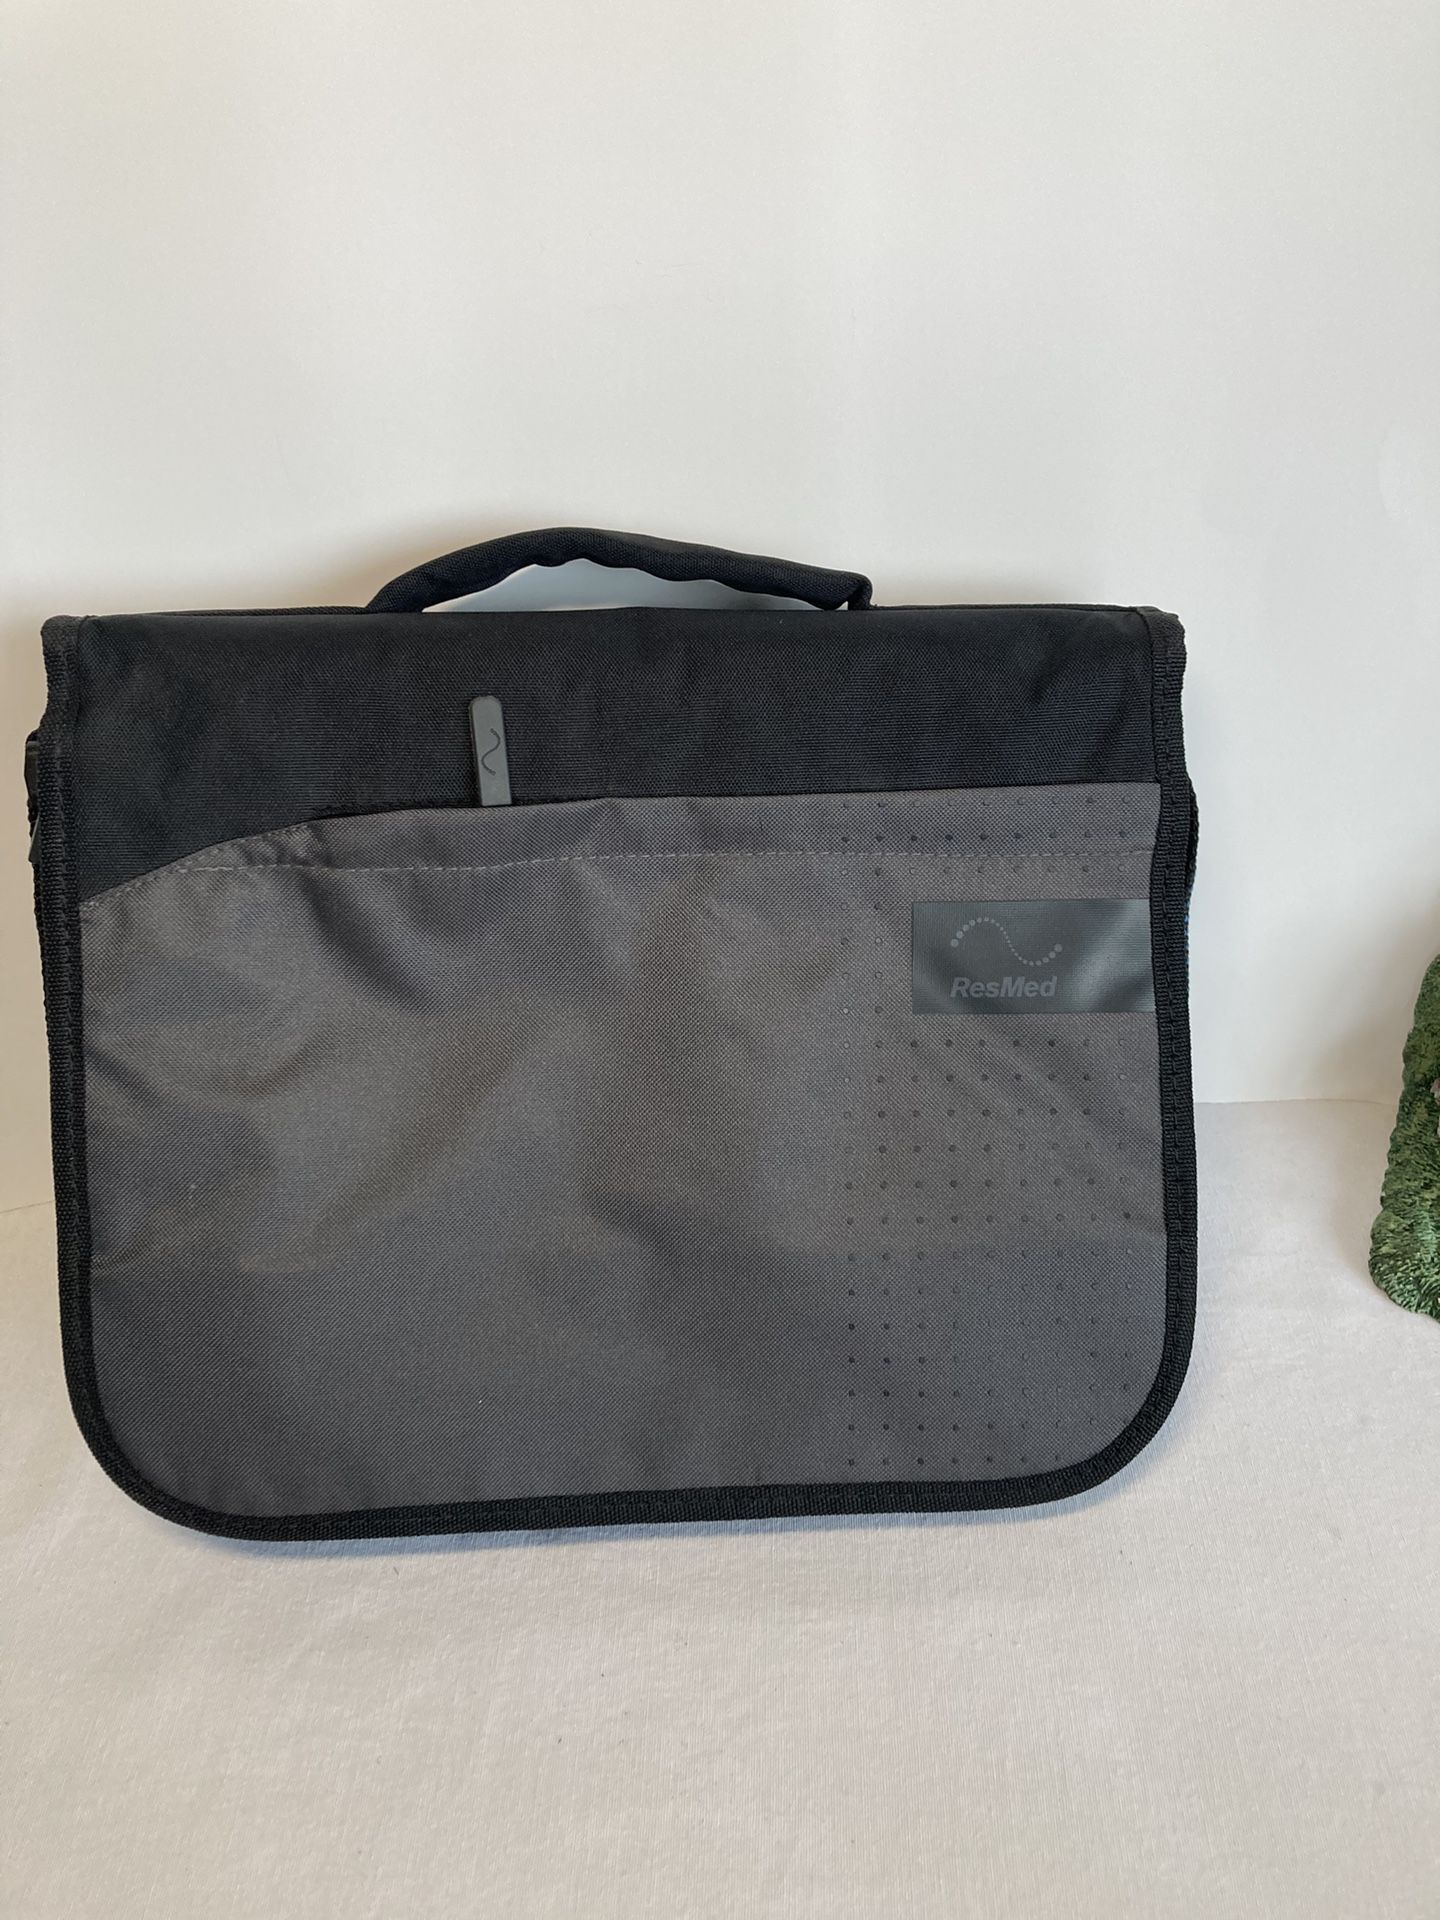 ResMed AirSense 10 CPAP Travel Bag Shoulder Tote Carry Case w/ Strap 